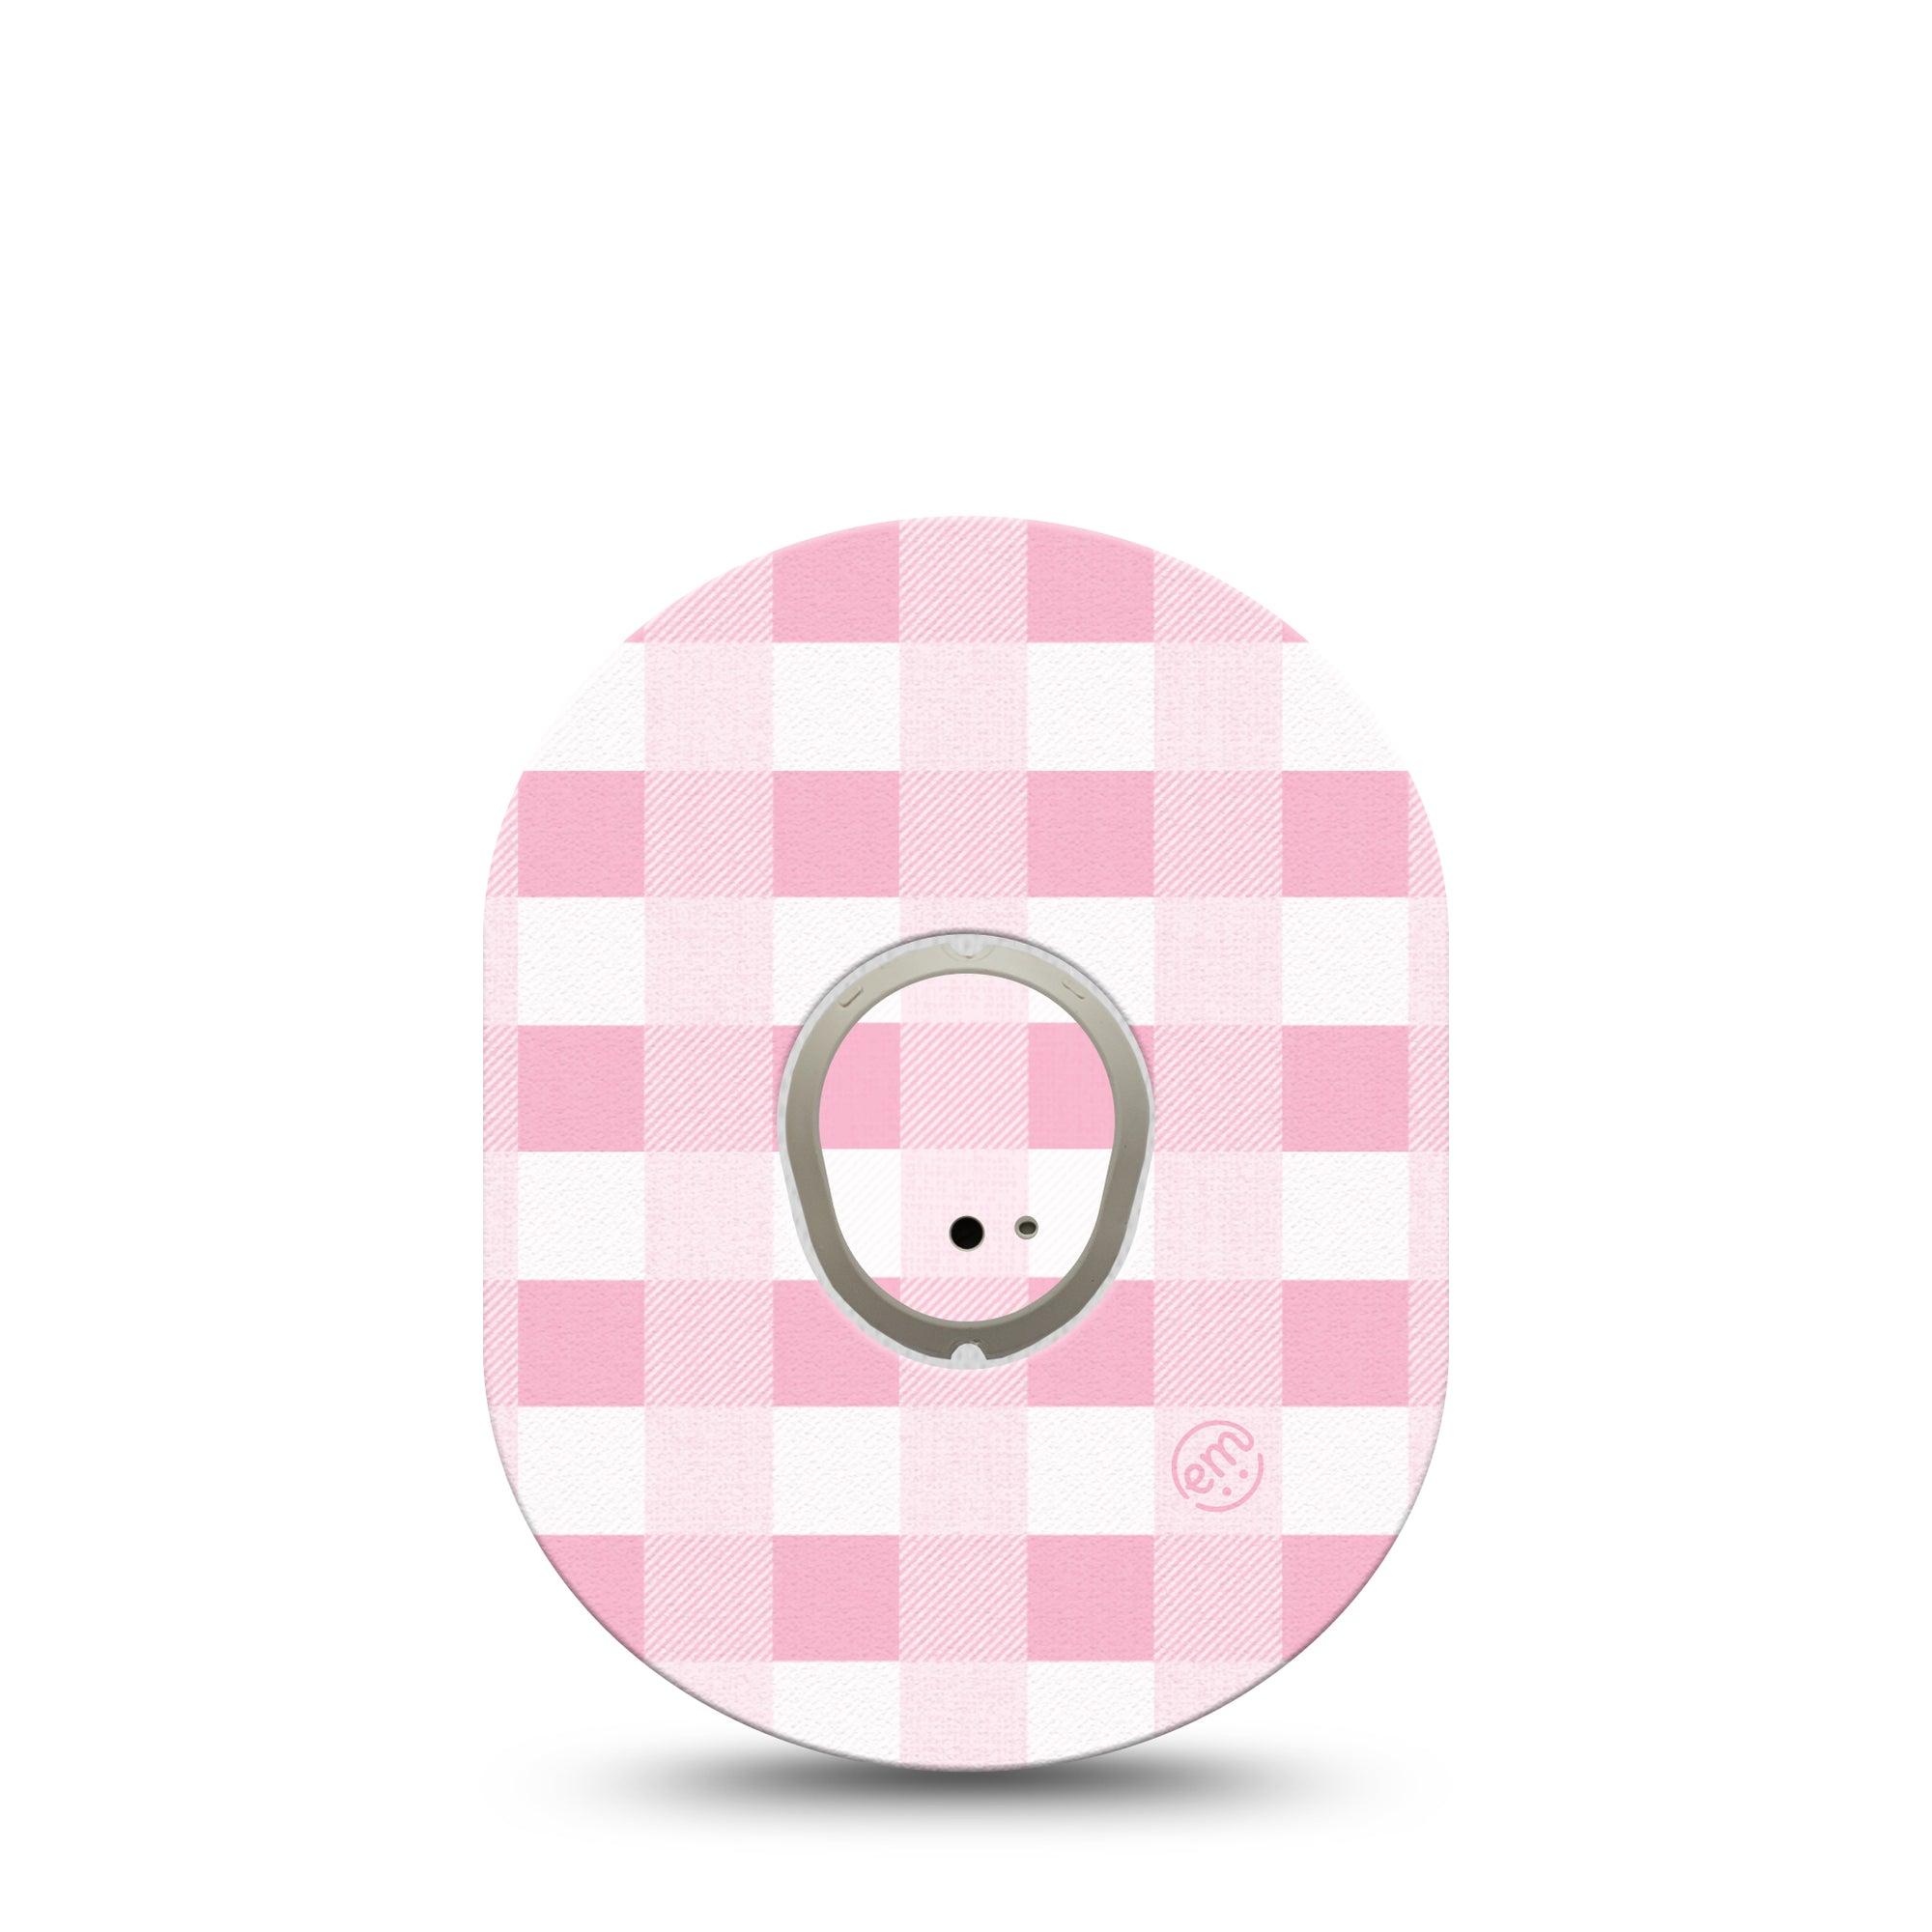 ExpressionMed Pink Gingham G7 Transmitter Sticker, Single, Pink Plaid Themed, Dexcom G7 Vinyl Center Sticker, With Matching Dexcom G7 Tape, CGM Overlay Patch Design